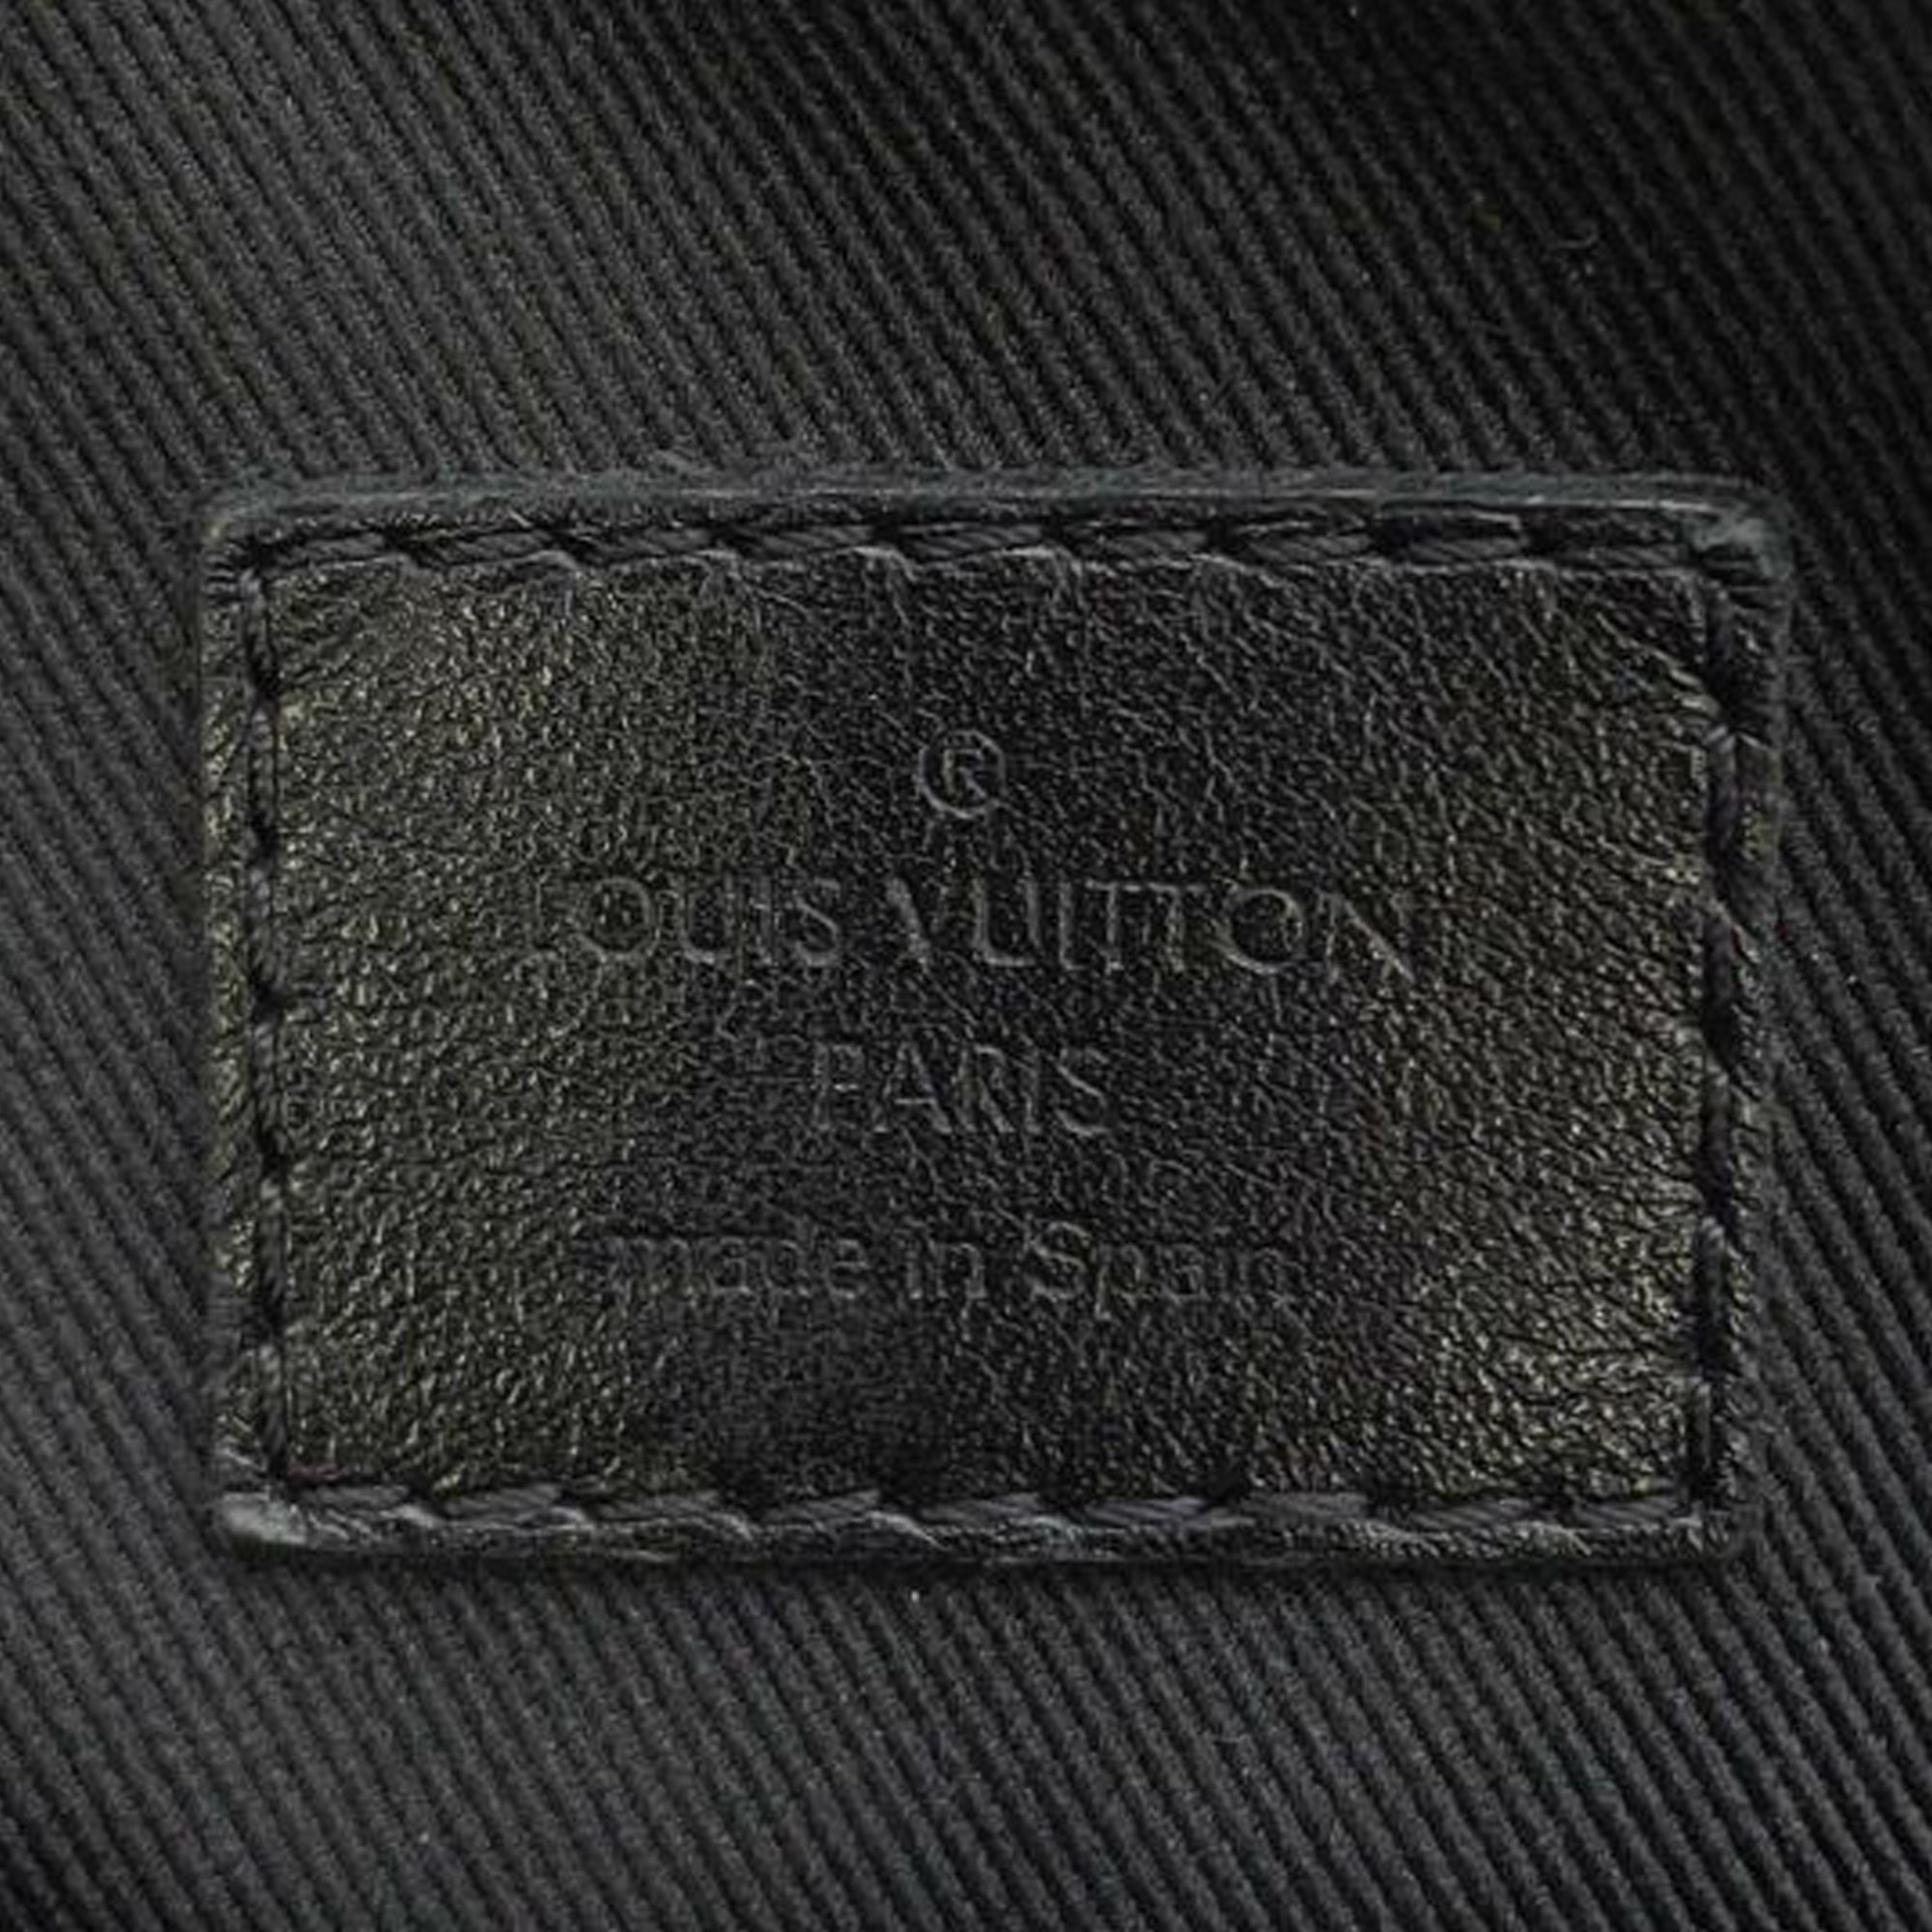 Authentic Louis Vuitton Galaxy Alpha Messenger Cross Body